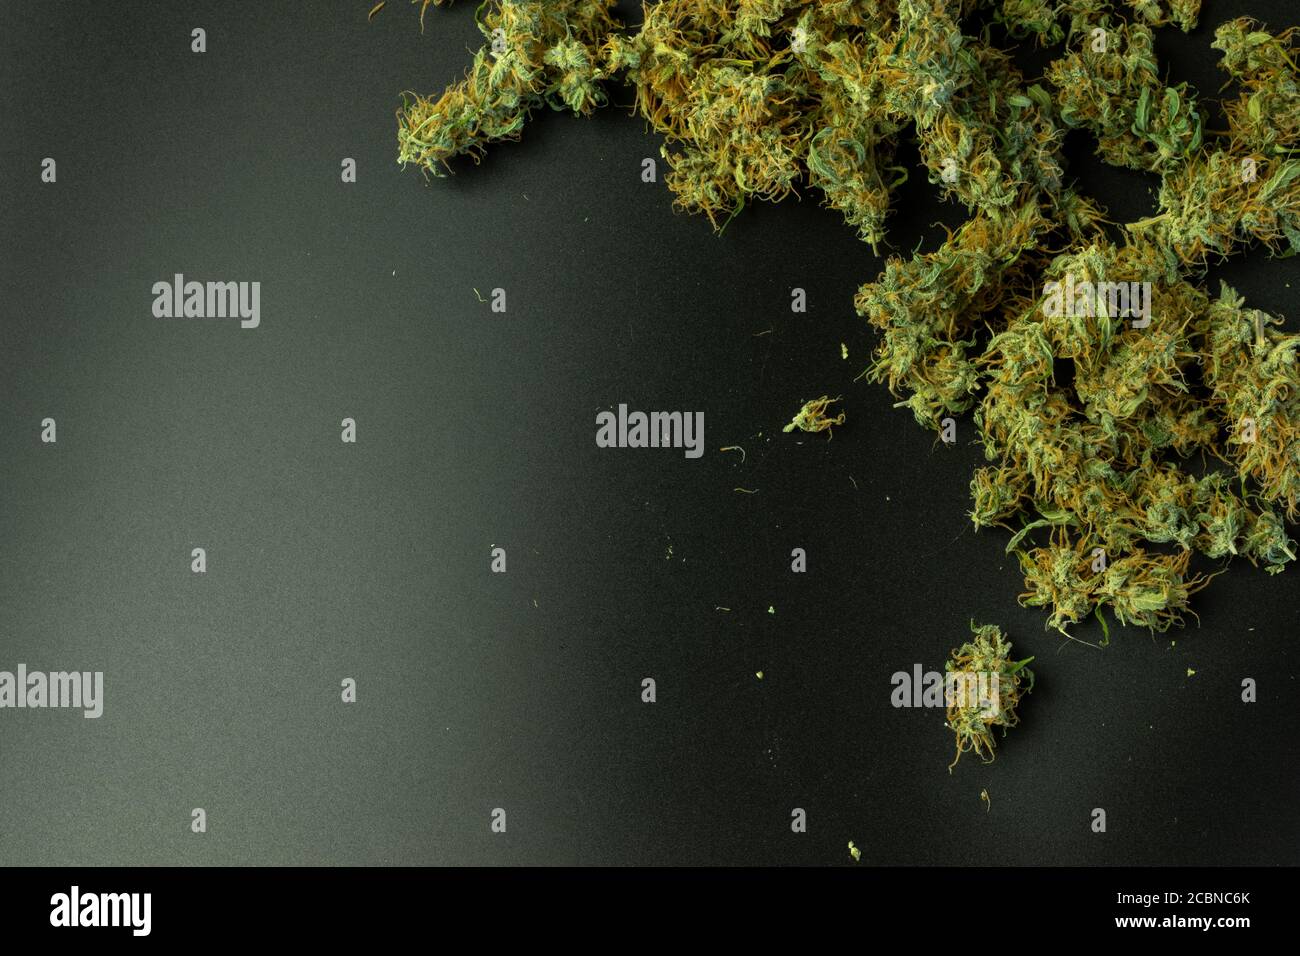 Piso de cannabis con espacio para copias Foto de stock